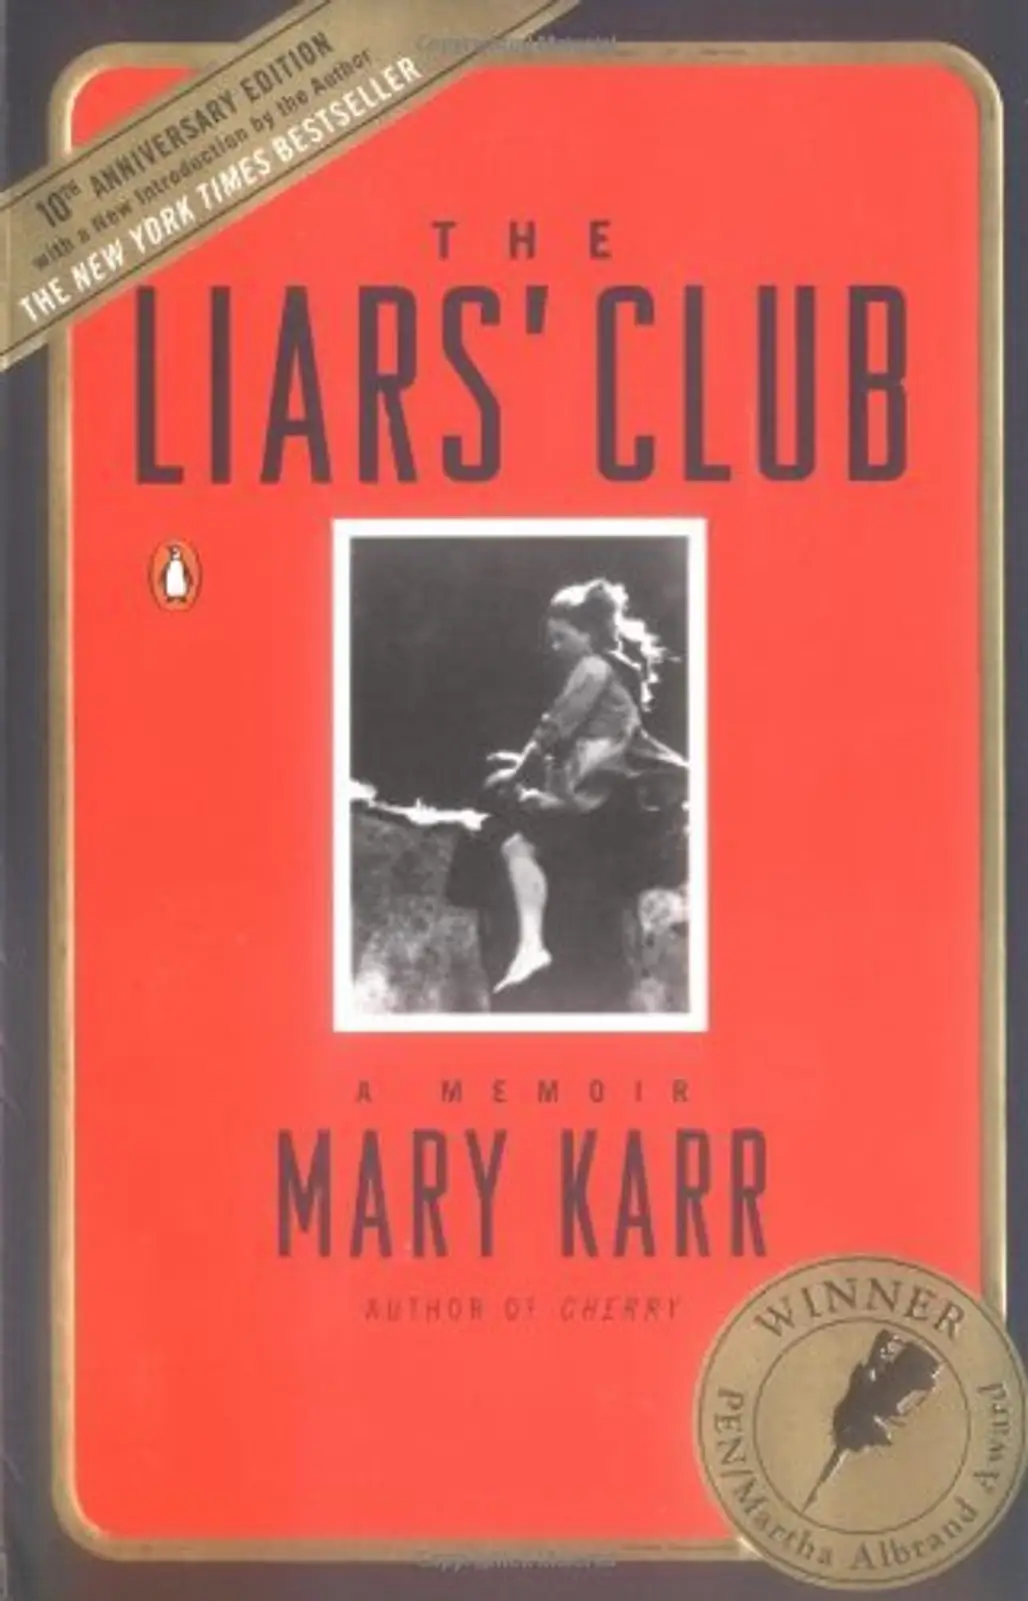 The Liars' Club: a Memoir by Mary Karr